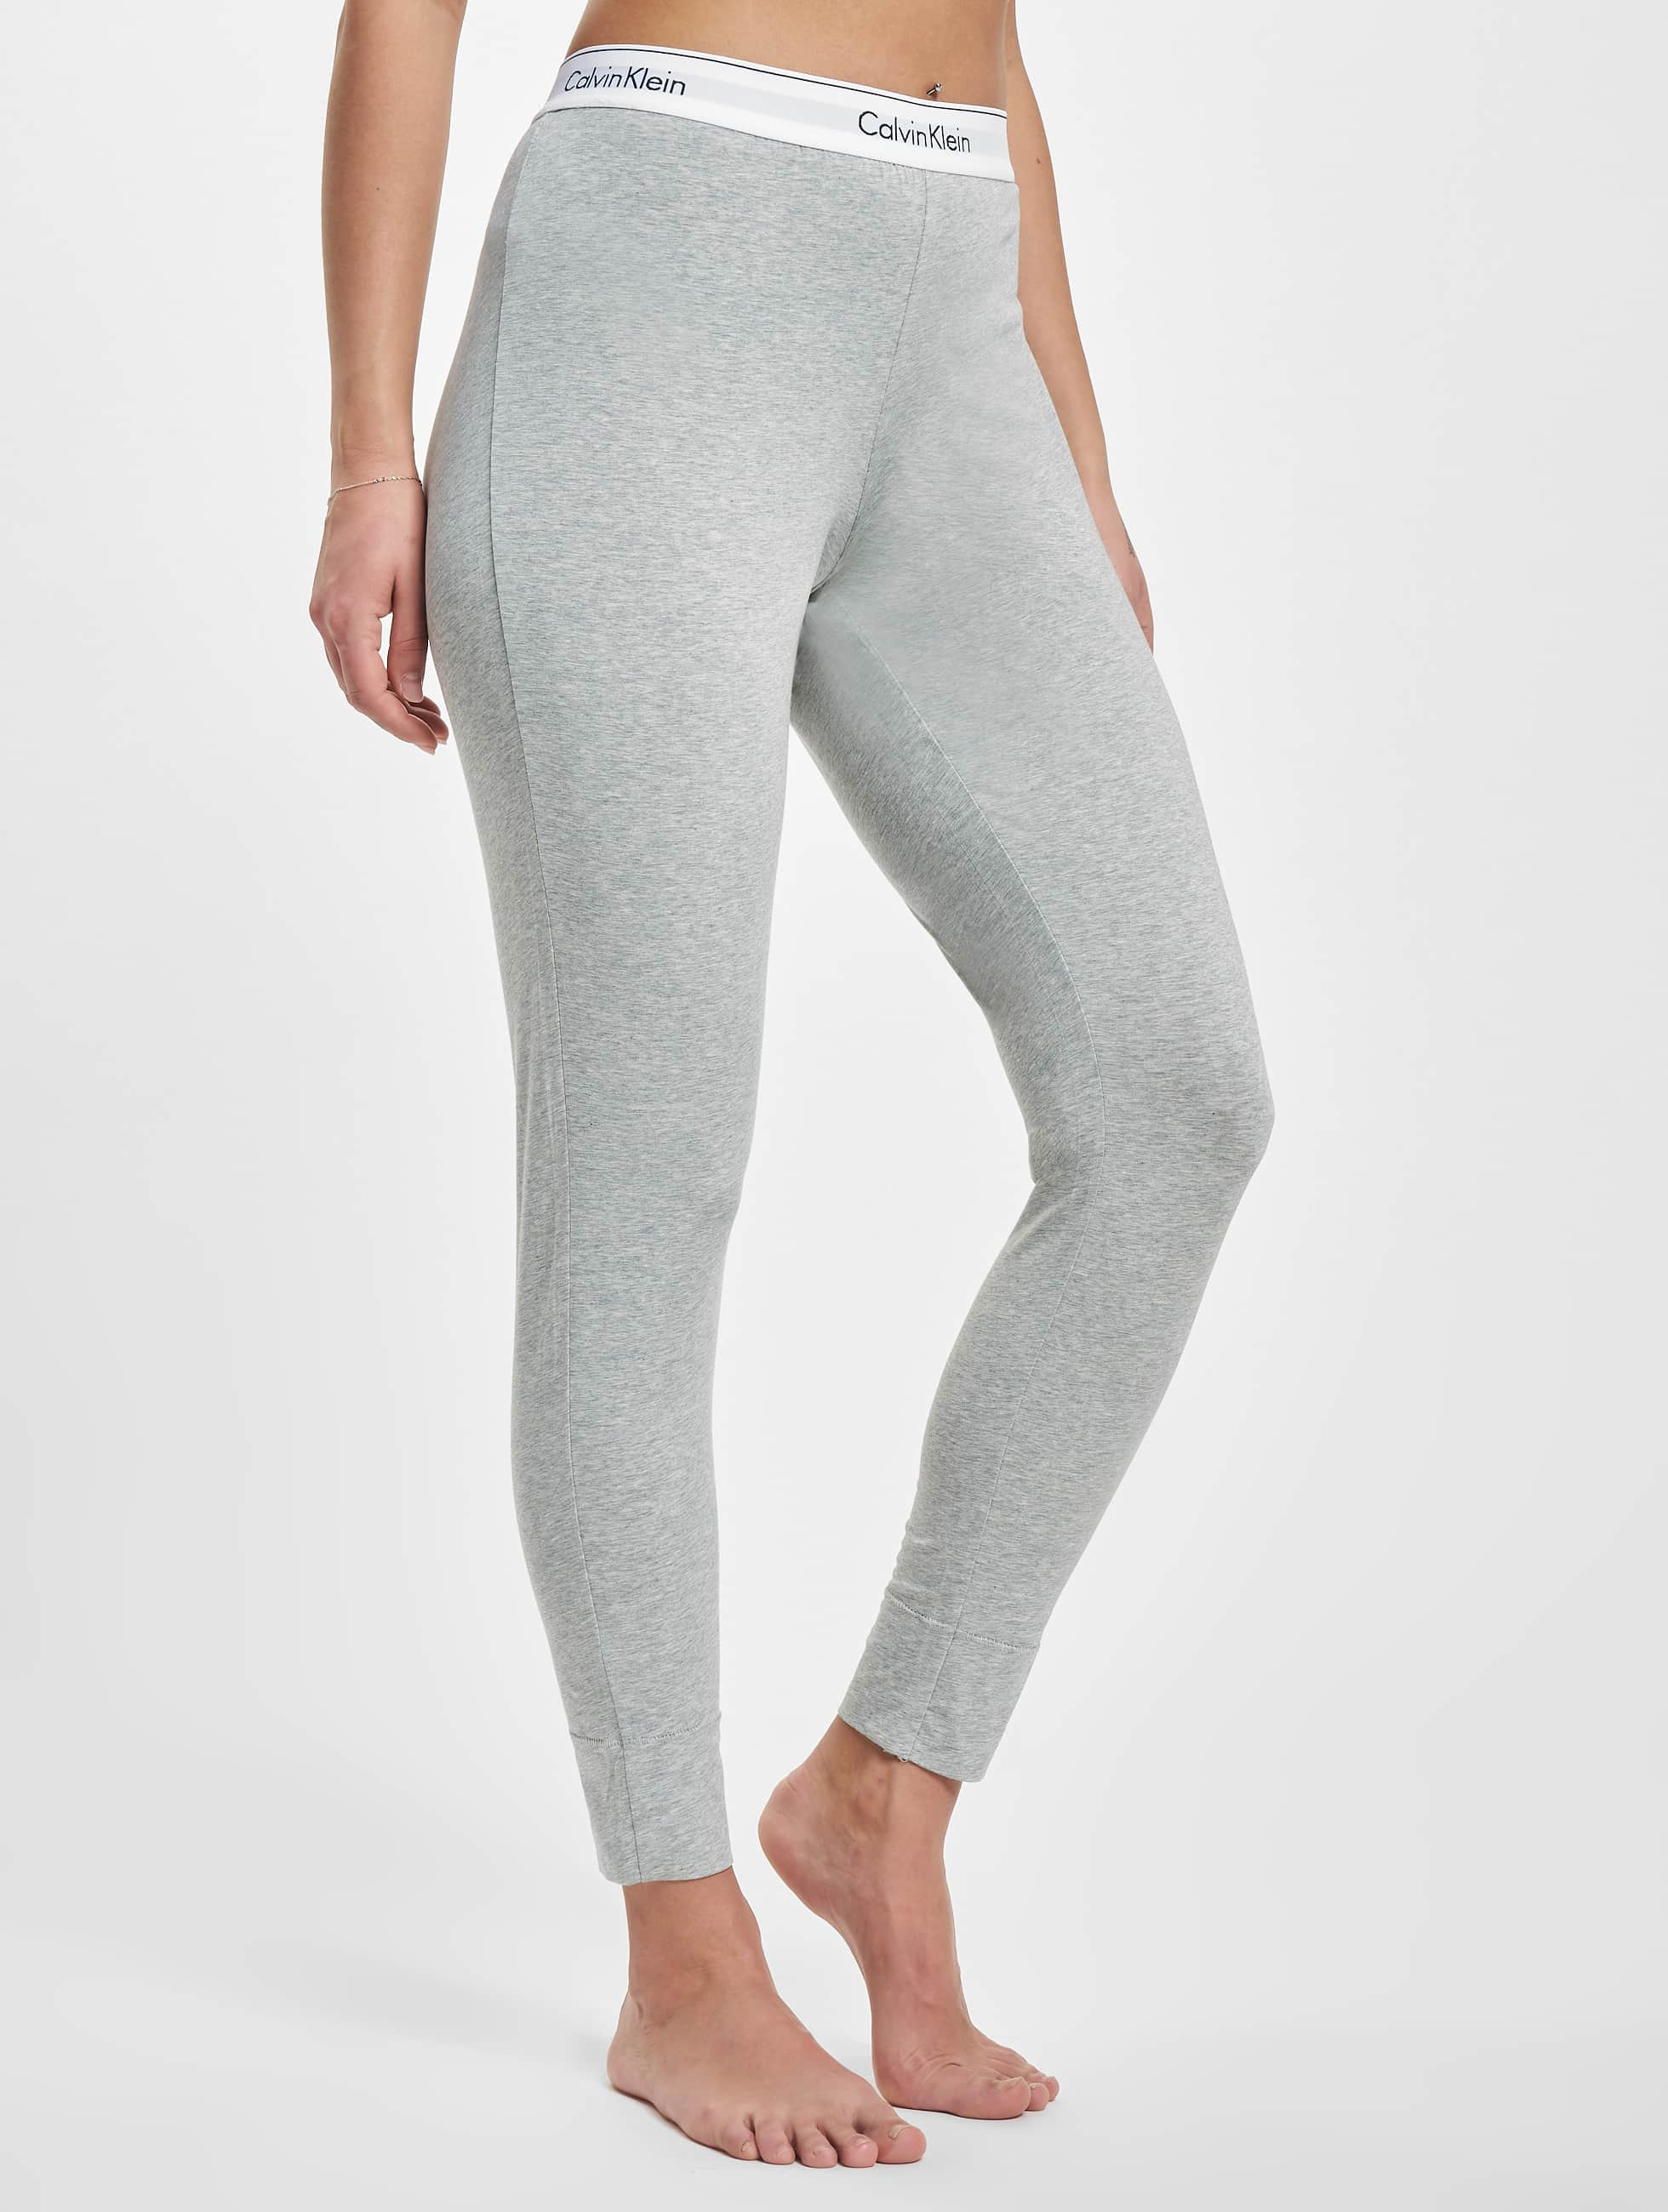 Samenwerken met item drijvend Calvin Klein Pant / Legging/Tregging Underwear in grey 971851